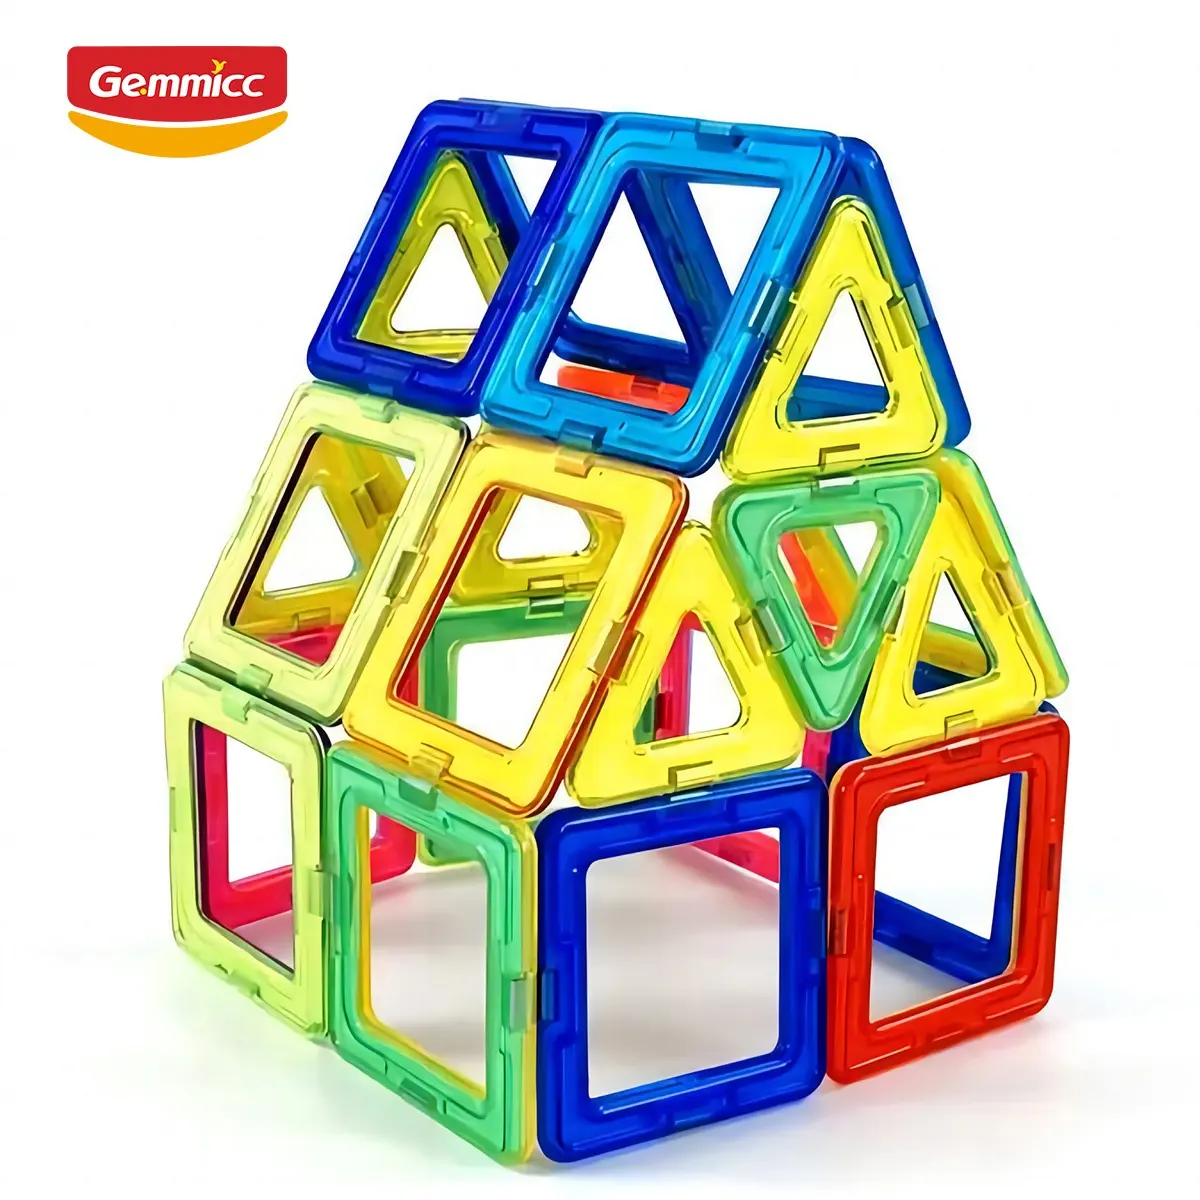 GemmiccBpaフリープラスチック素材Abs建設玩具磁気ビルディングブロックセット